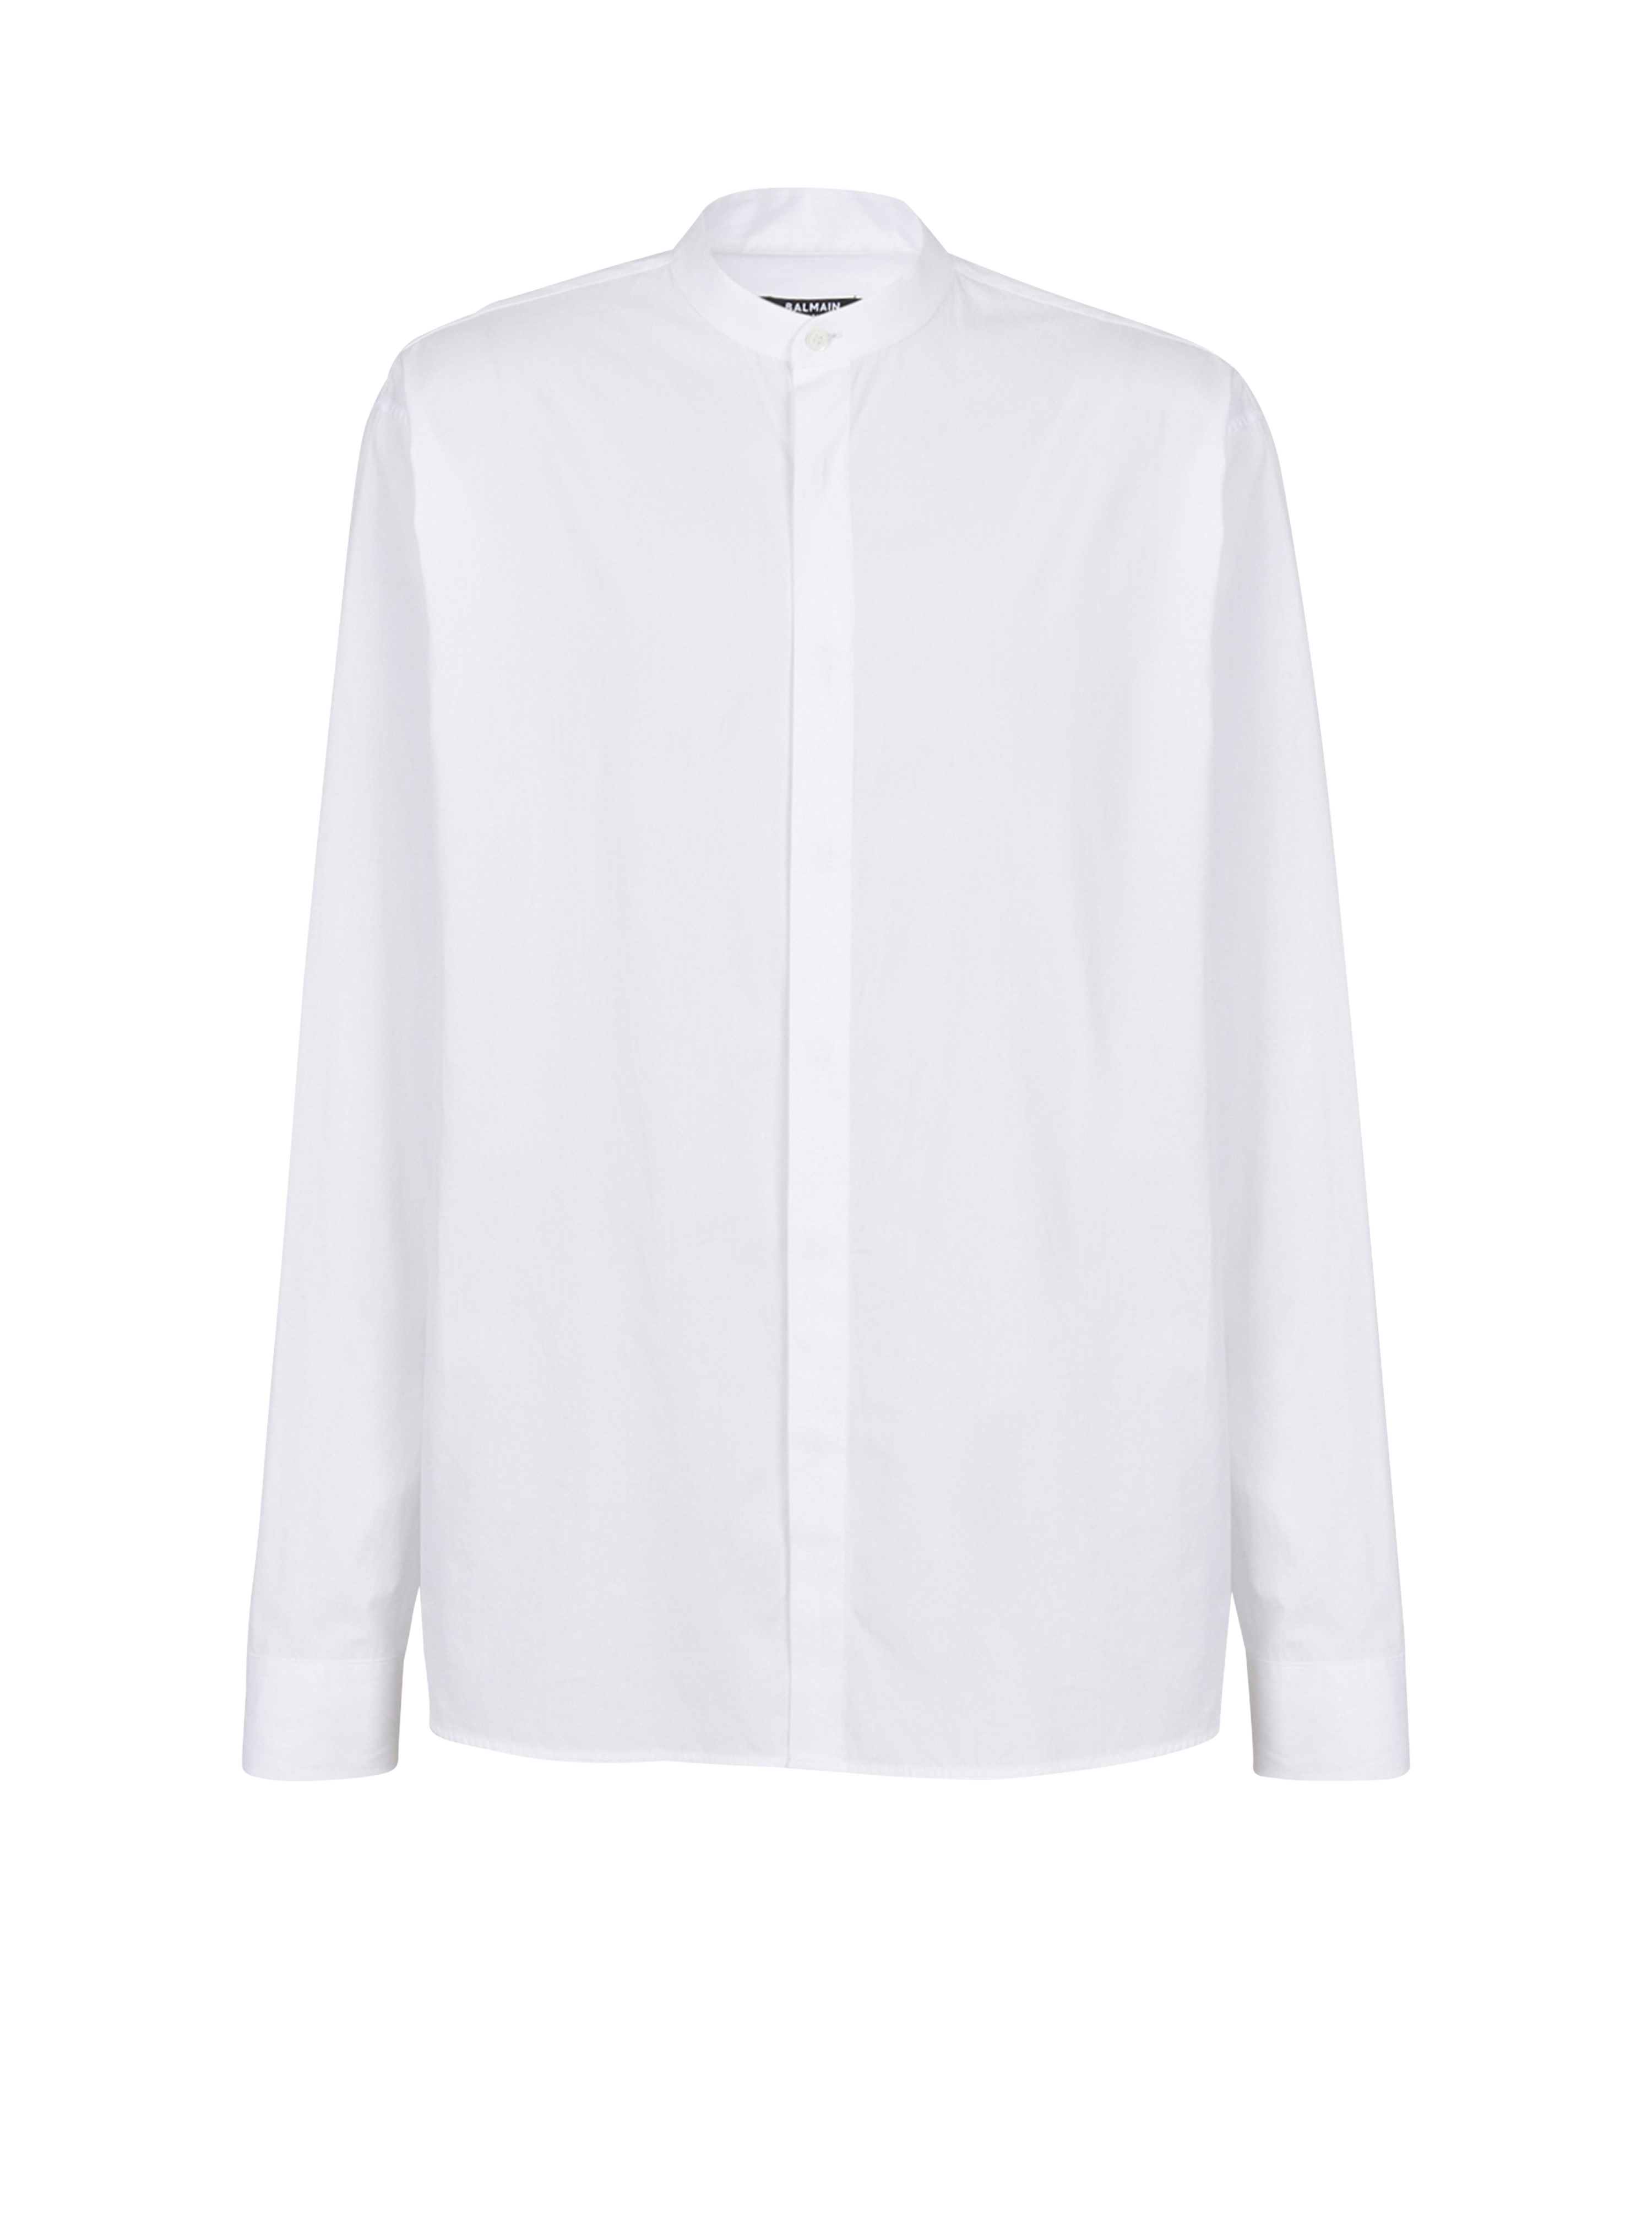 Cotton shirt, white